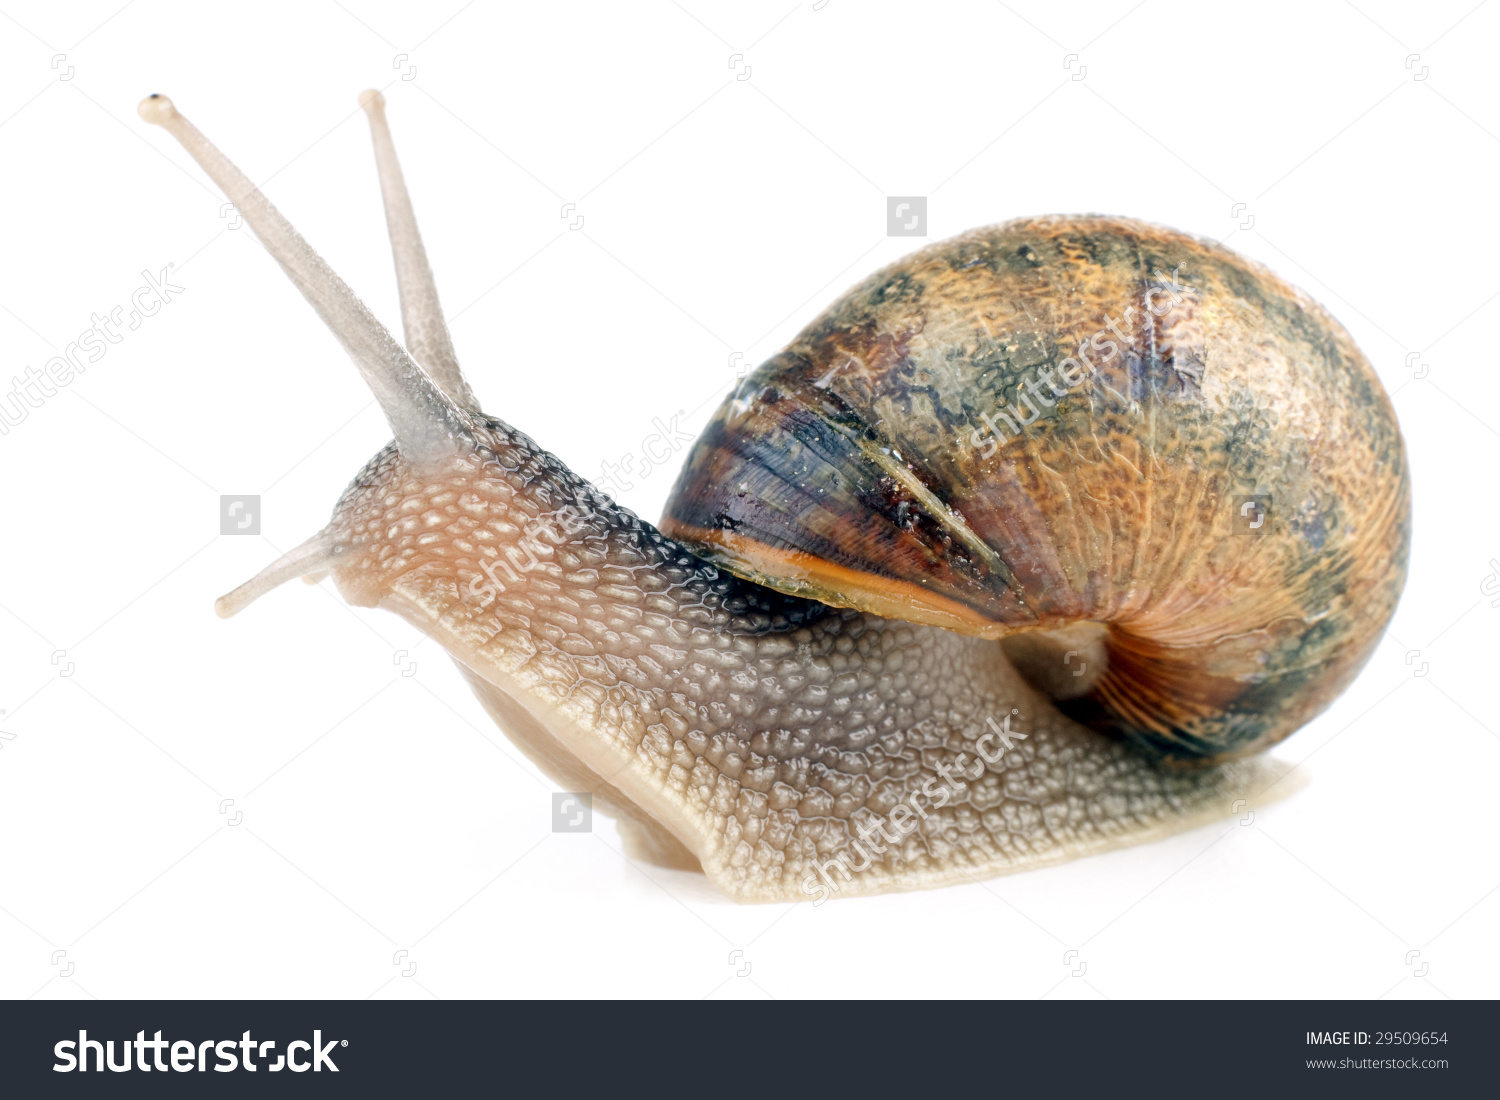 Common European Snail Helix Aspersa Isolated On White Background.